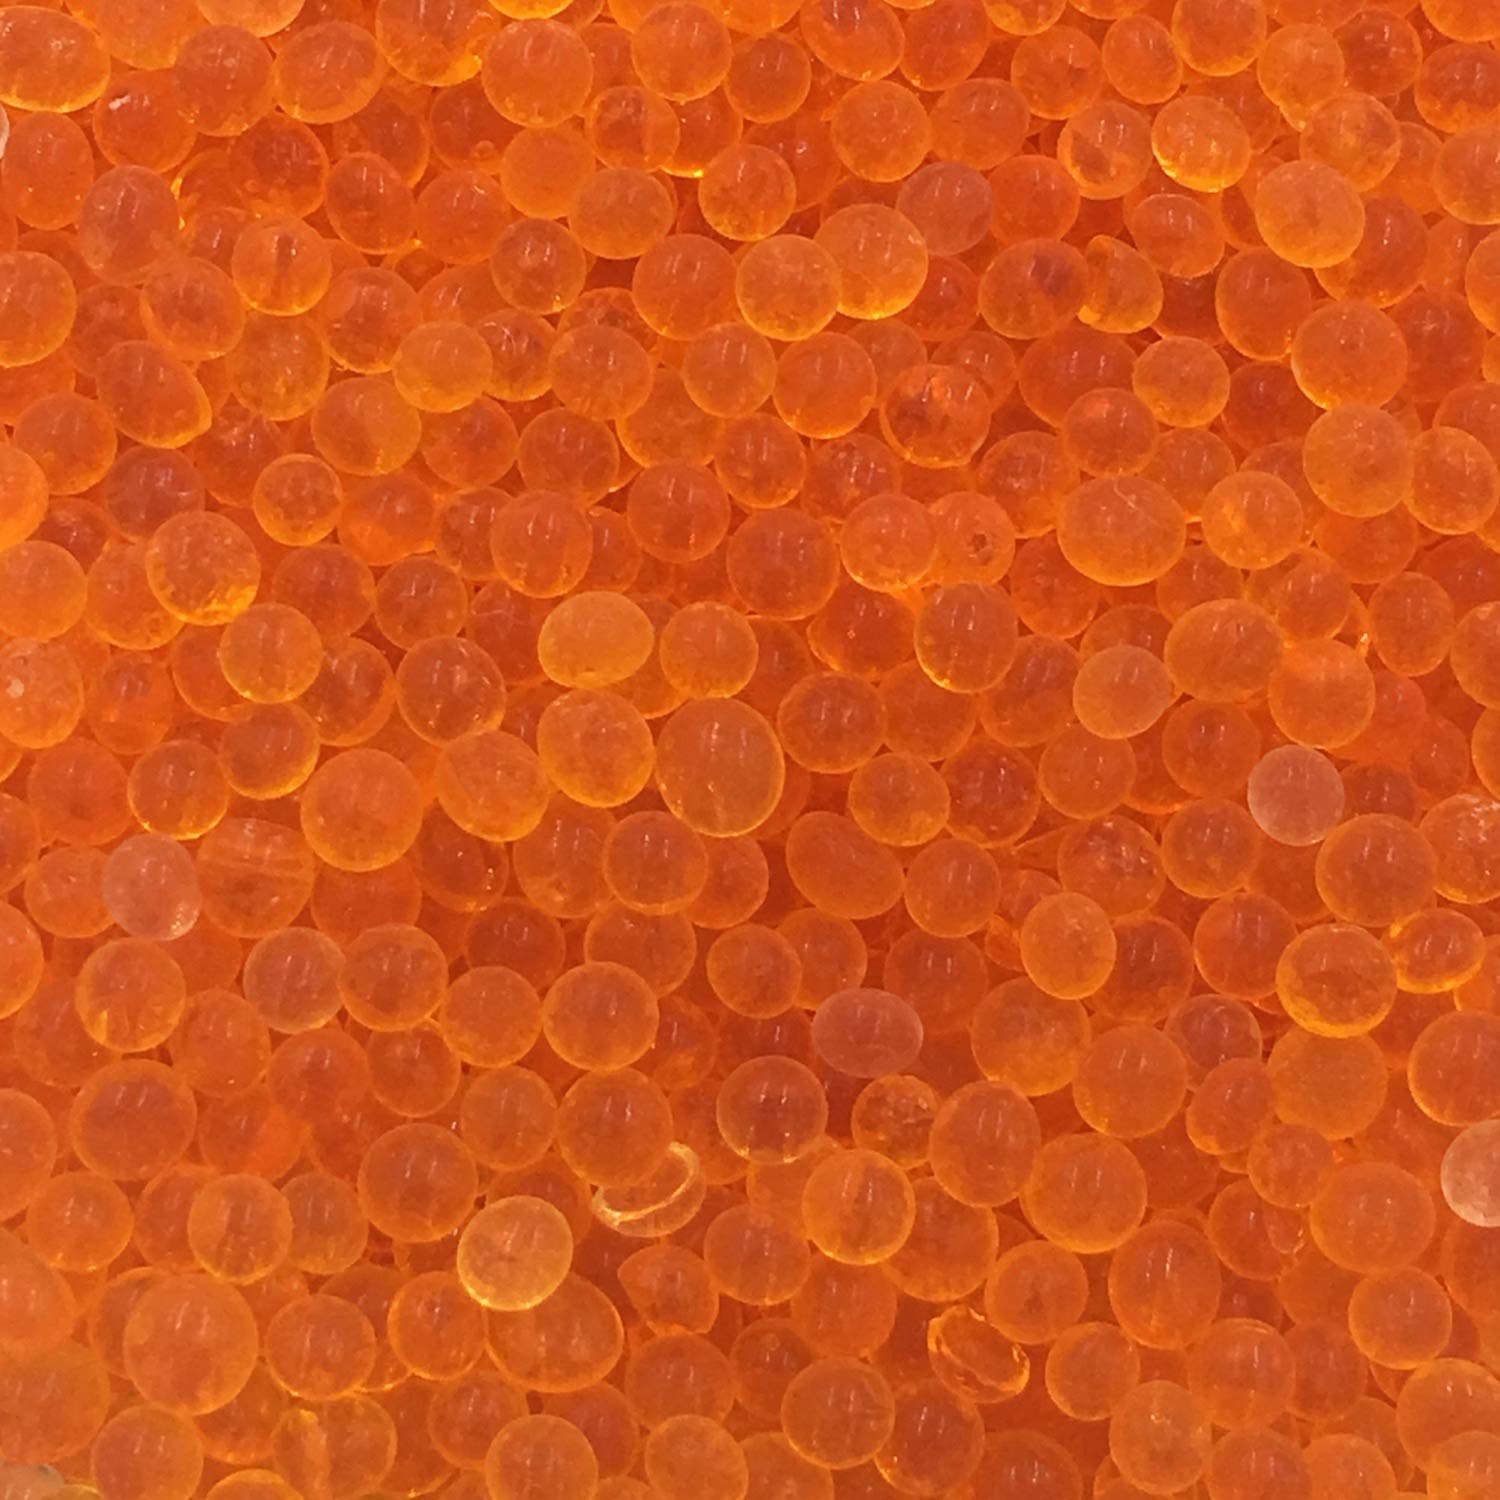 1 kg Silica Gel Orange Trockenmittel Indikator regenerierbar Entfeuchter (1 KG)